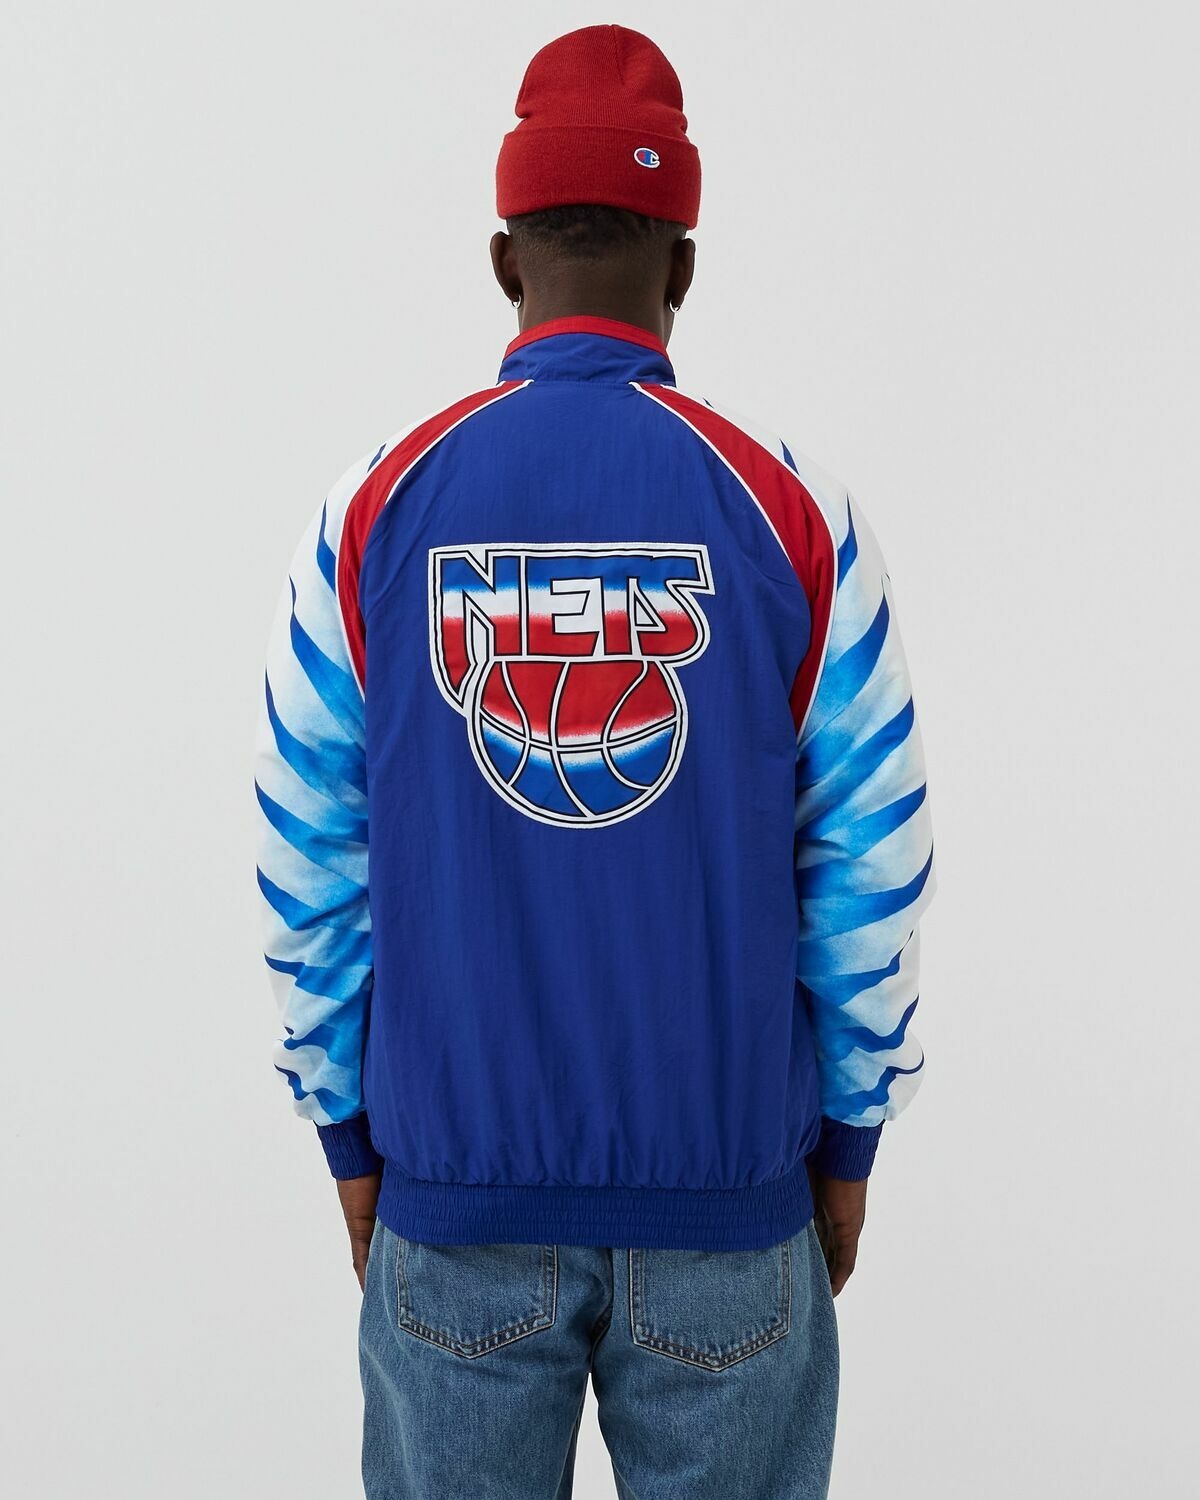 Mitchell & Ness Nba Authentic Warm Up Jacket New Jersey Nets 1993 94 Blue - Mens - Team Jackets/Track Jackets